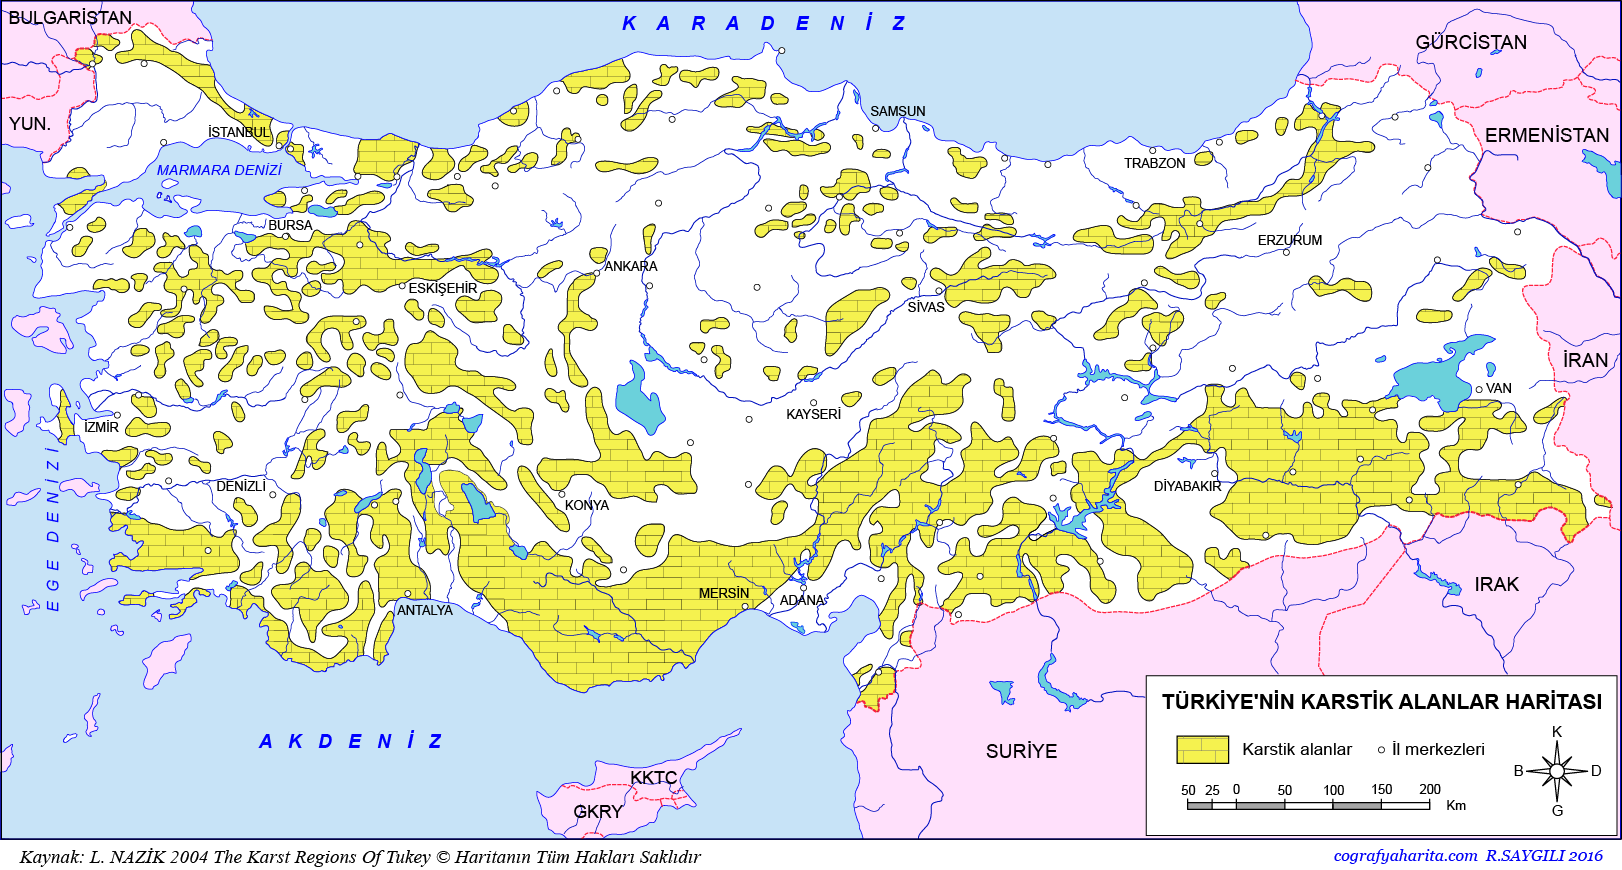 turkiye-karstik-alanlar-haritasi.png